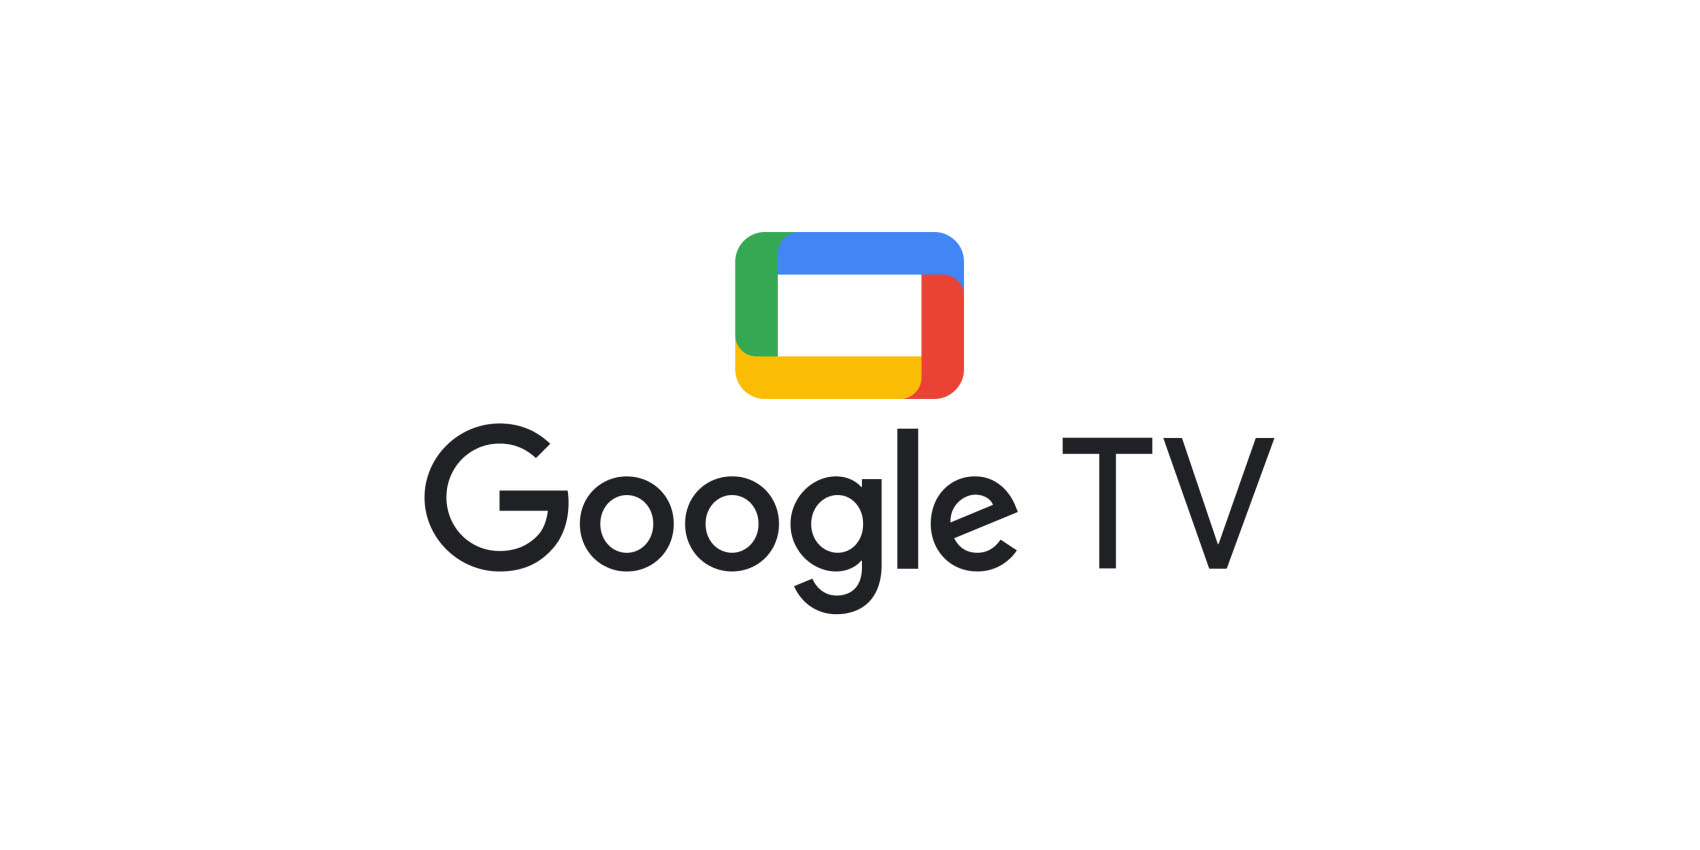 Google TV apps & streaming list